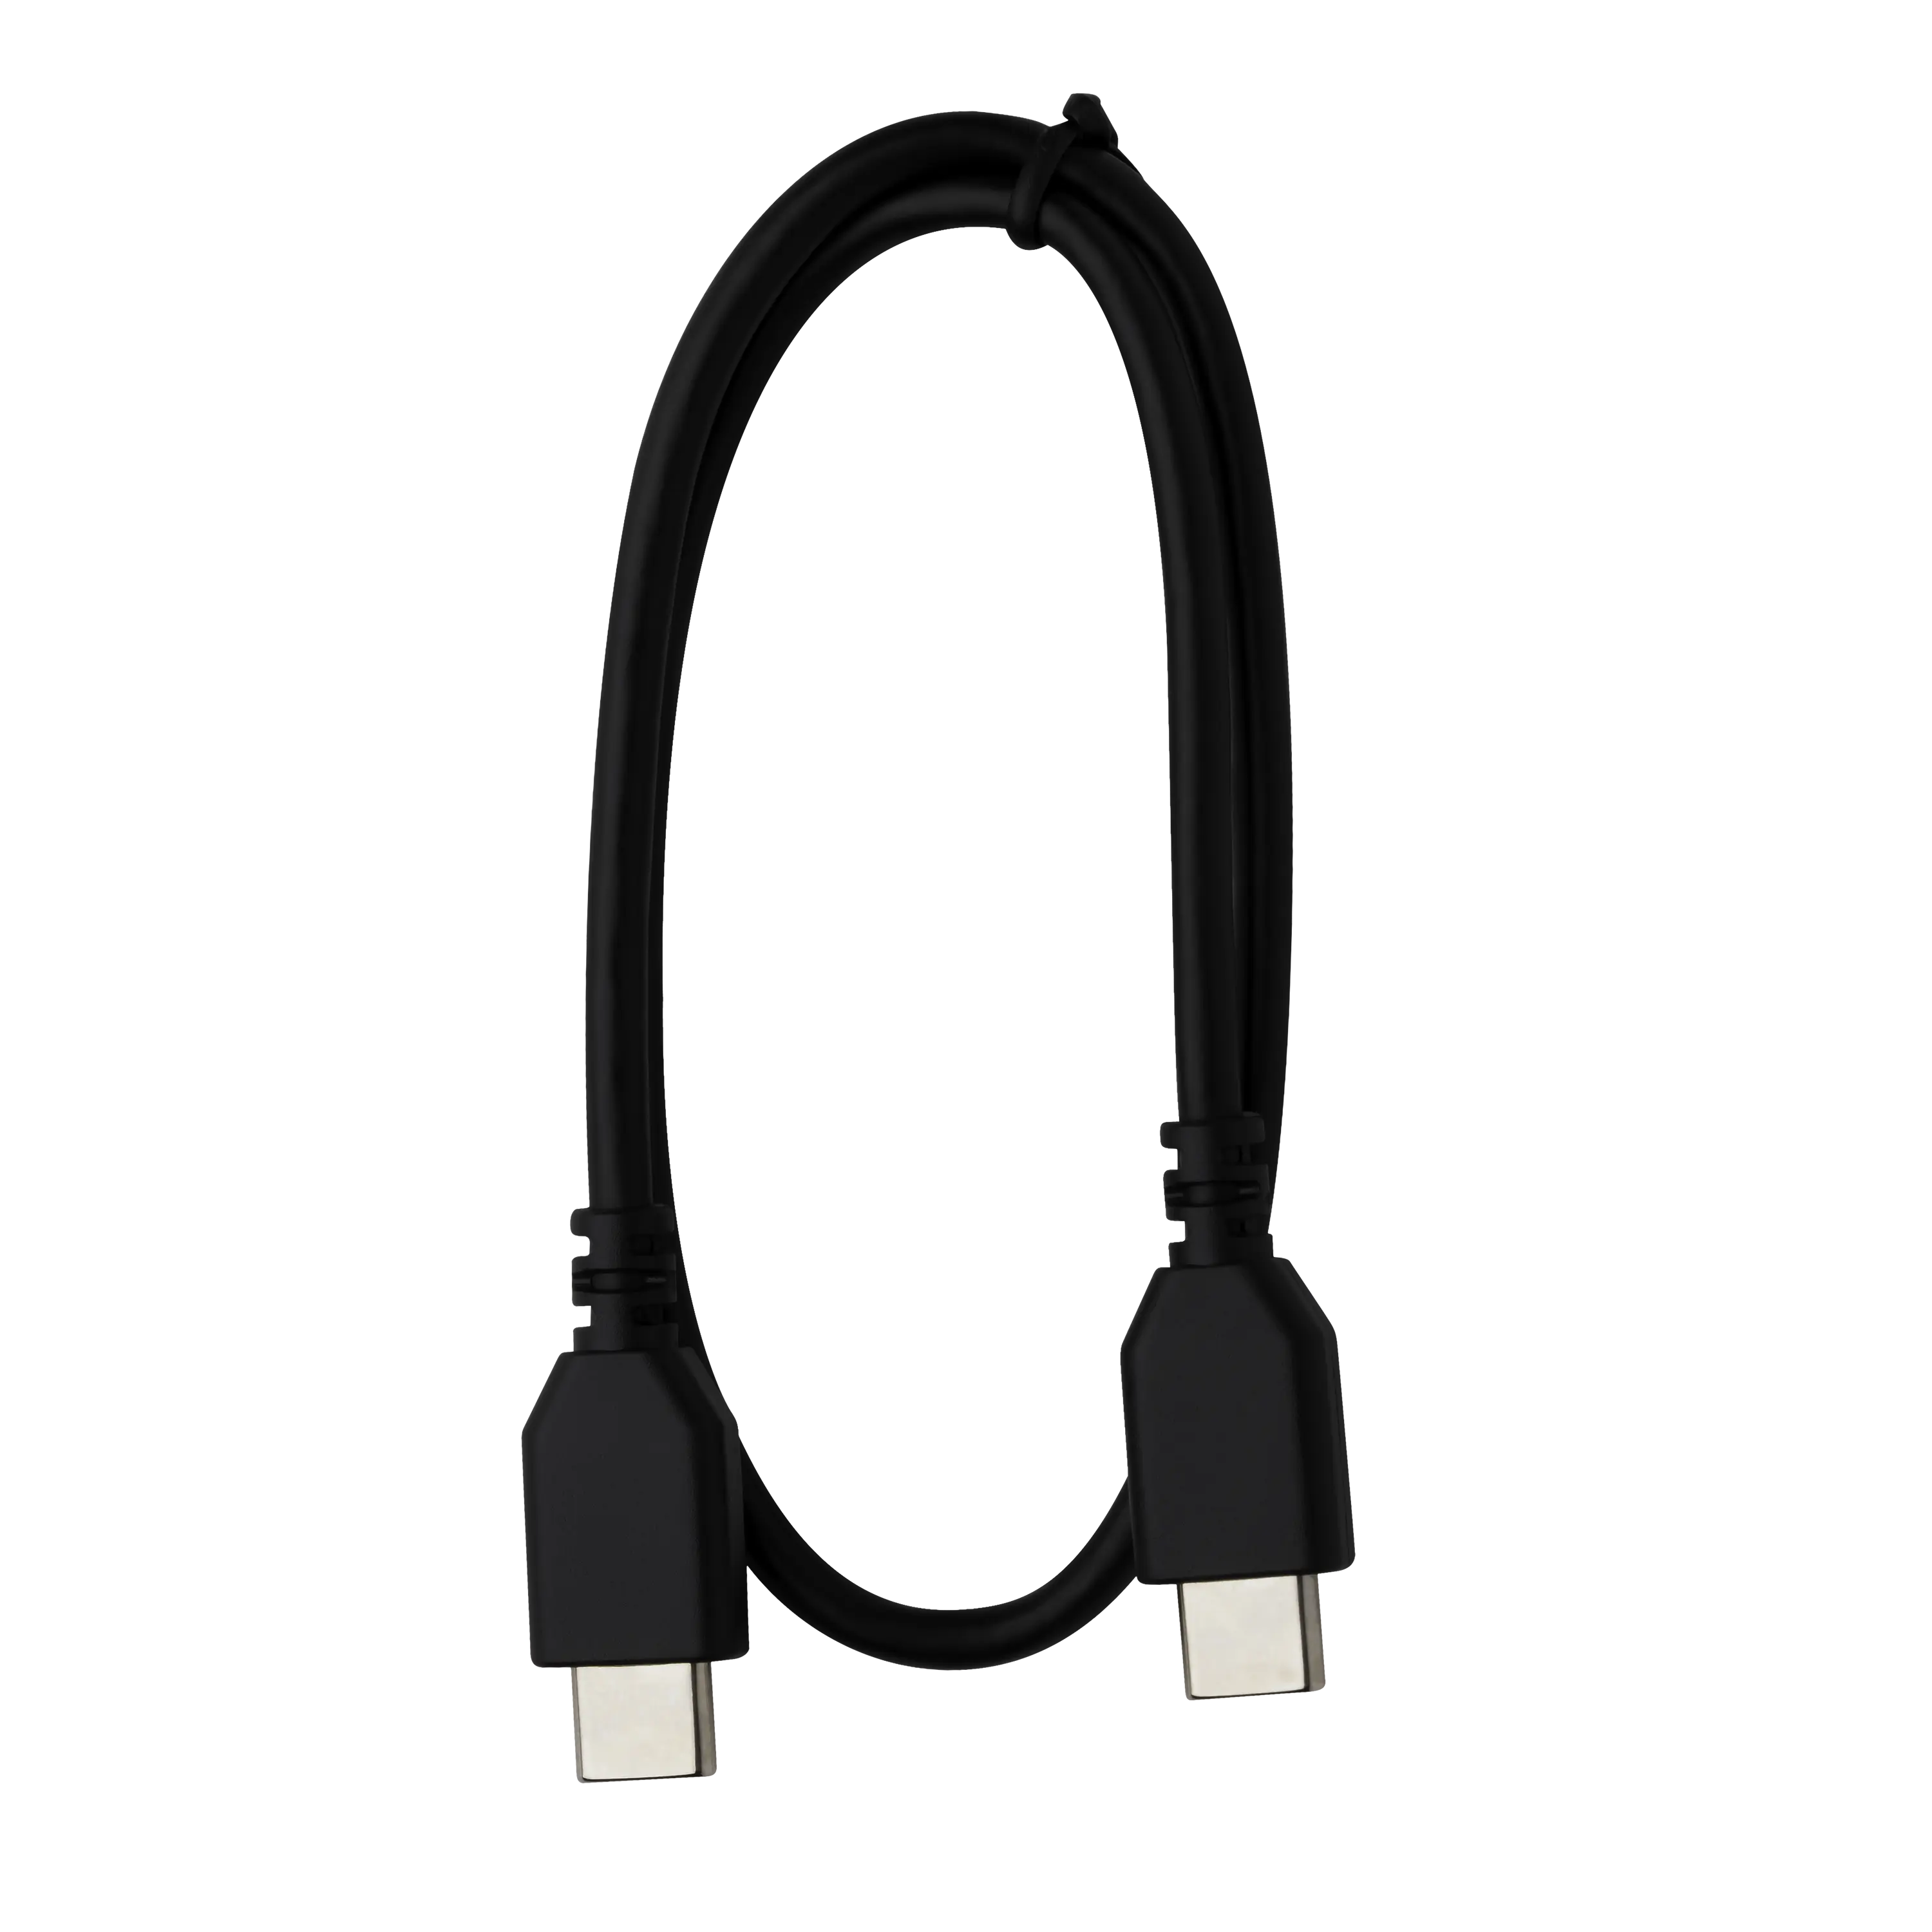 AMV-USBC-USBC15 USB-C TO USB-C Cable 15"